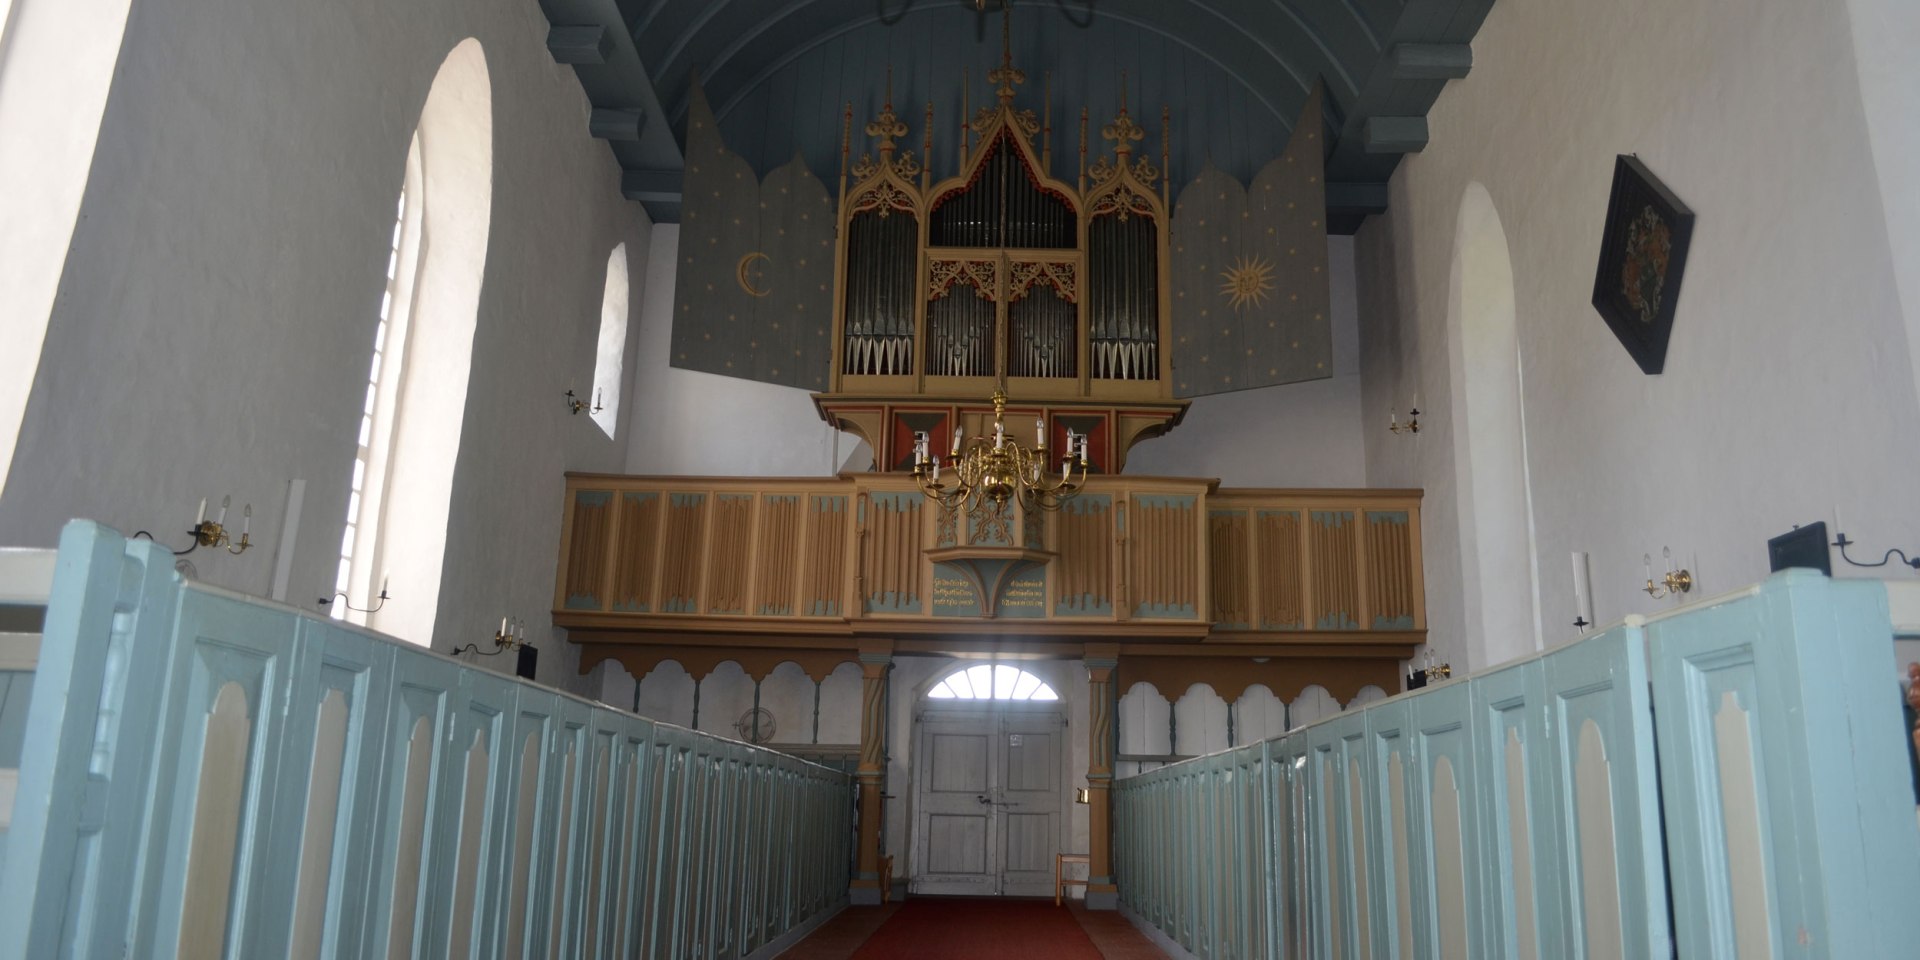  Gothic organ in the church of Rysum, the oldest organ in Northern Germany, © Ostfriesland Tourismus GmbH / www.ostfriesland.de